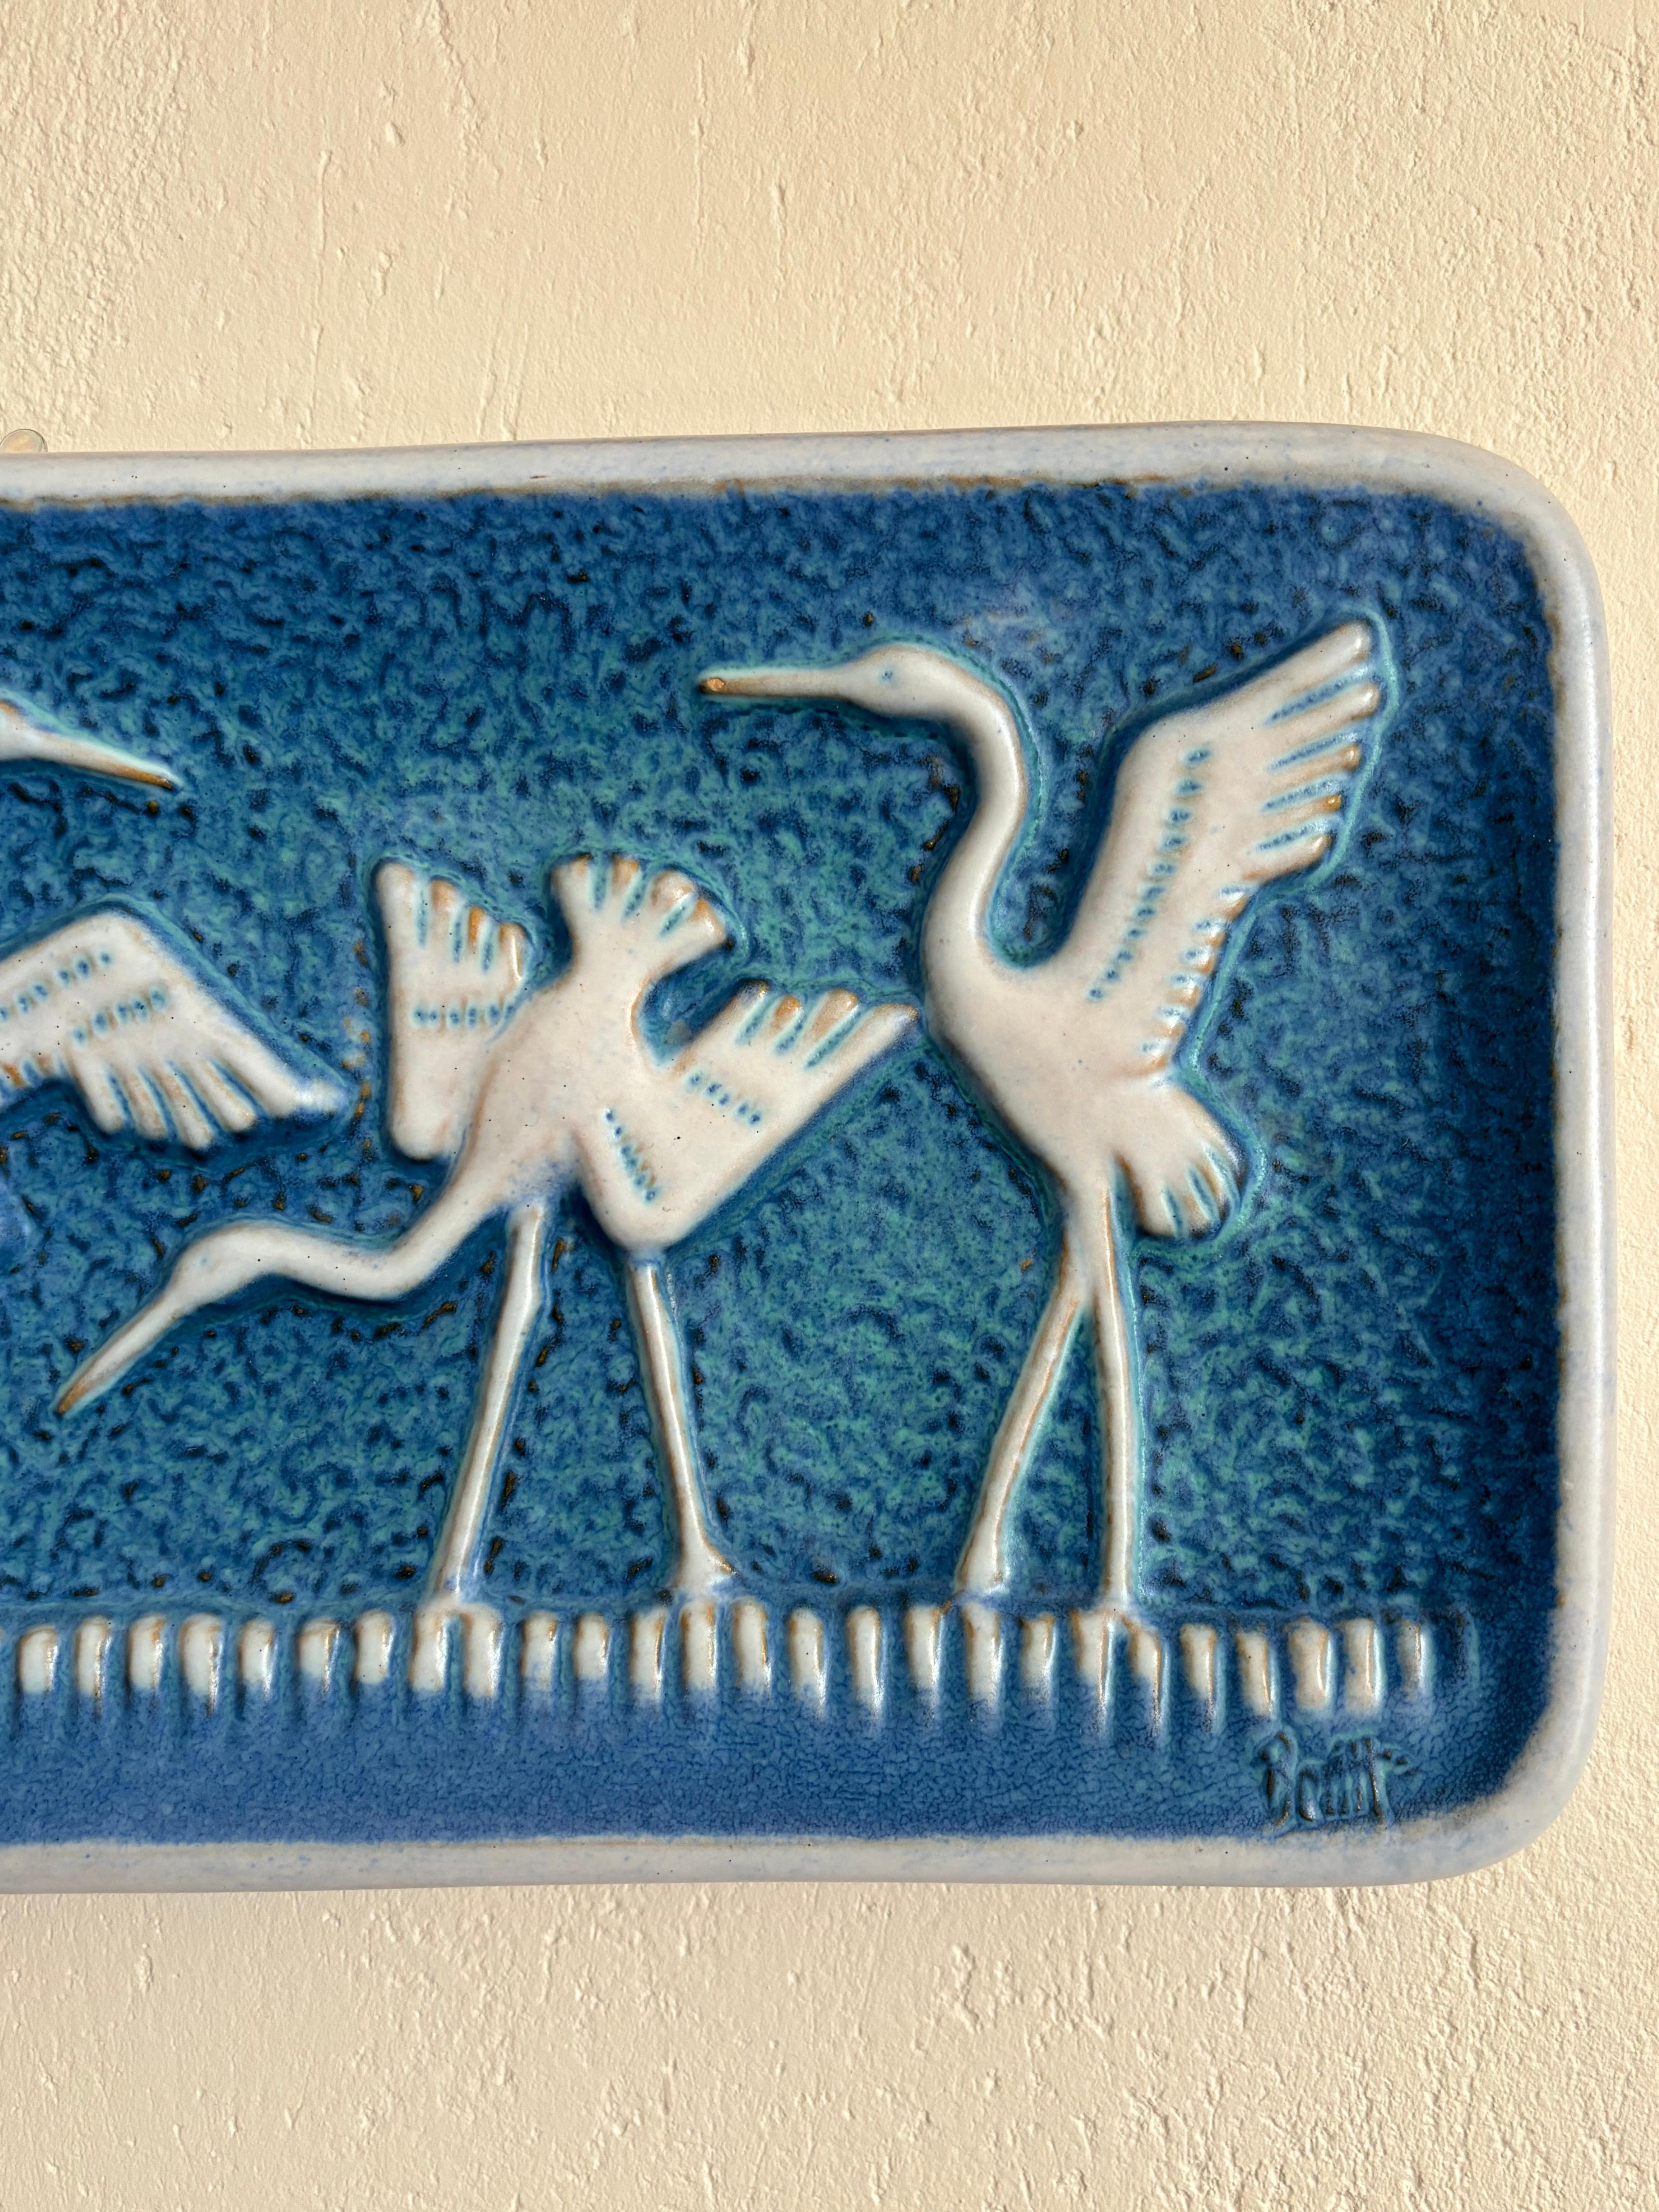 Norrman Motala Blue Crane Ceramic Wall Plaque, 1960s In Good Condition For Sale In Copenhagen, DK